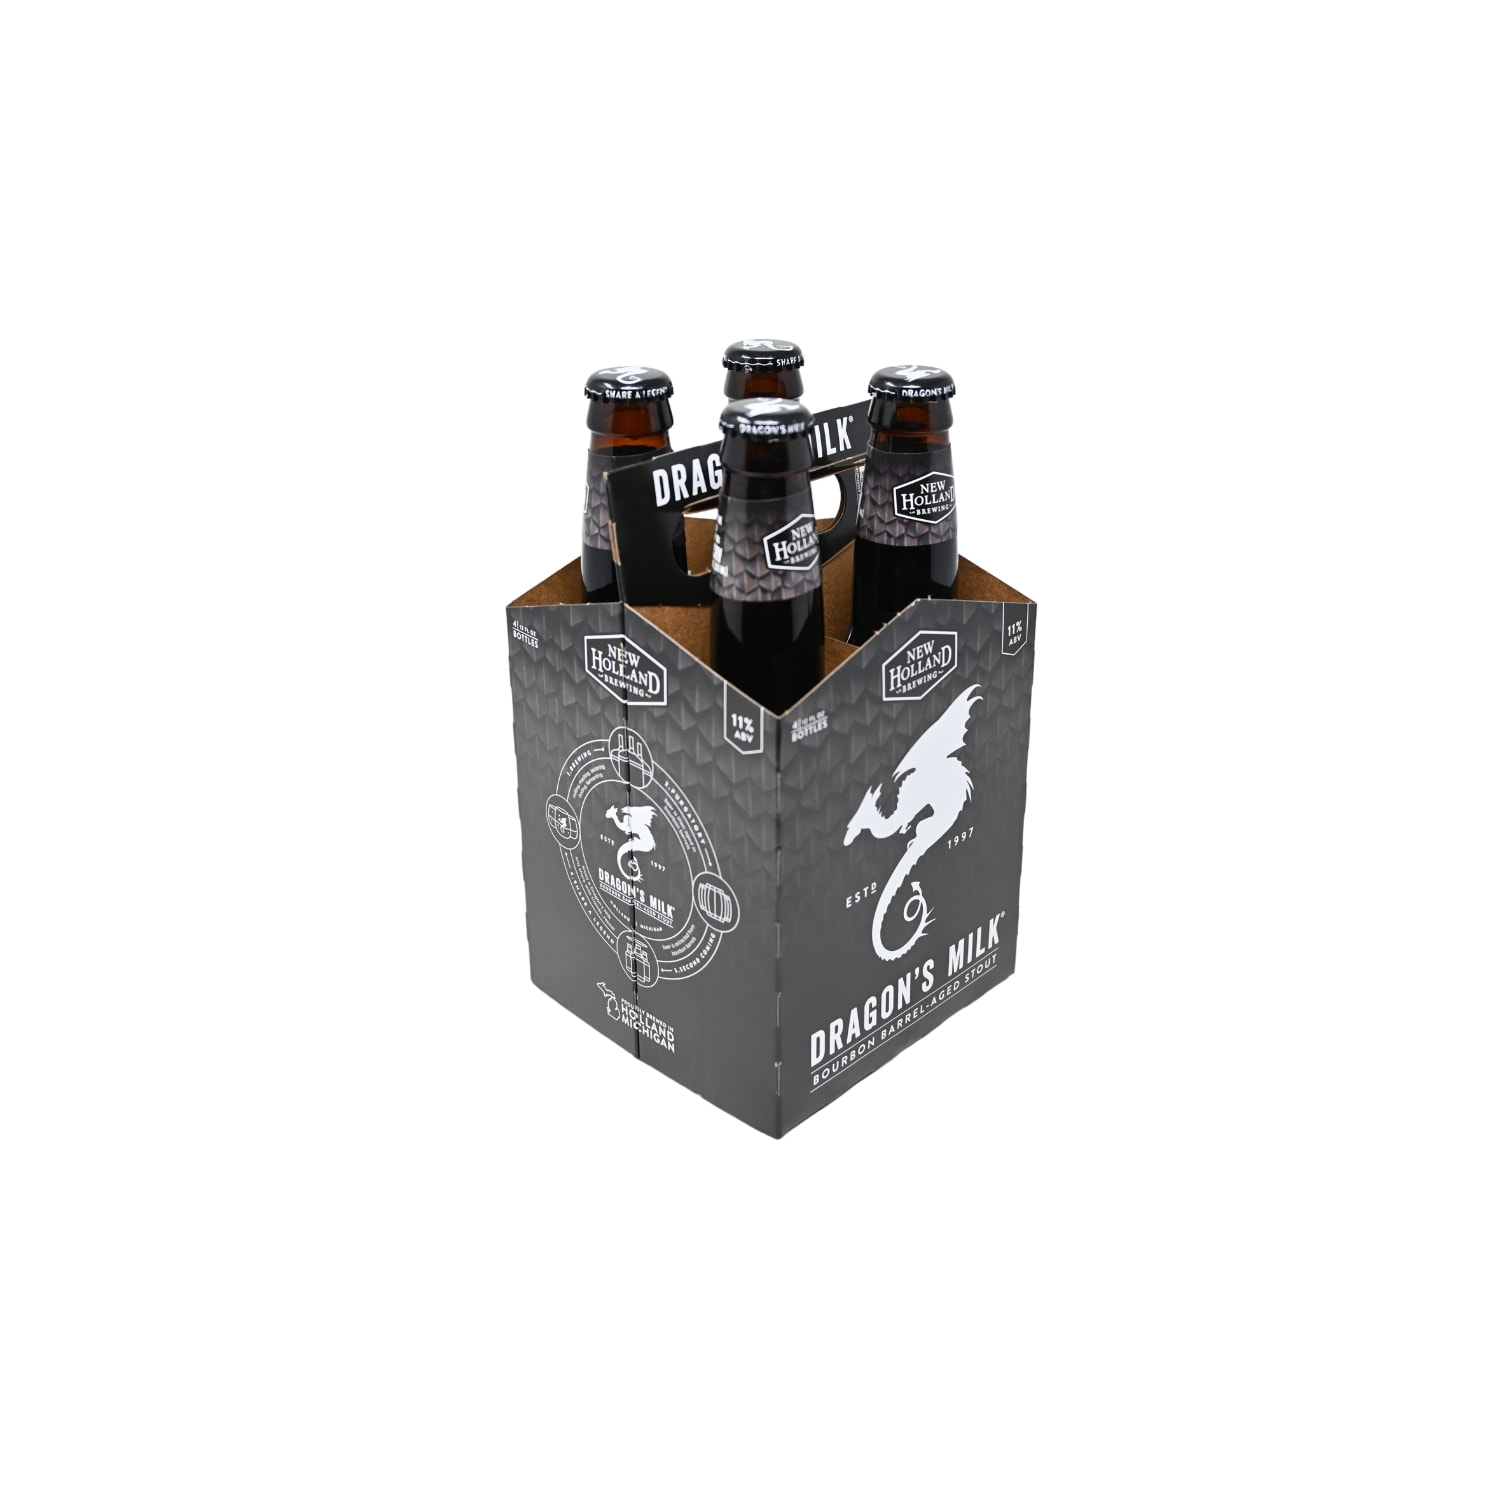 New Holland Dragon S Milk Stone S Beer Beverage Market